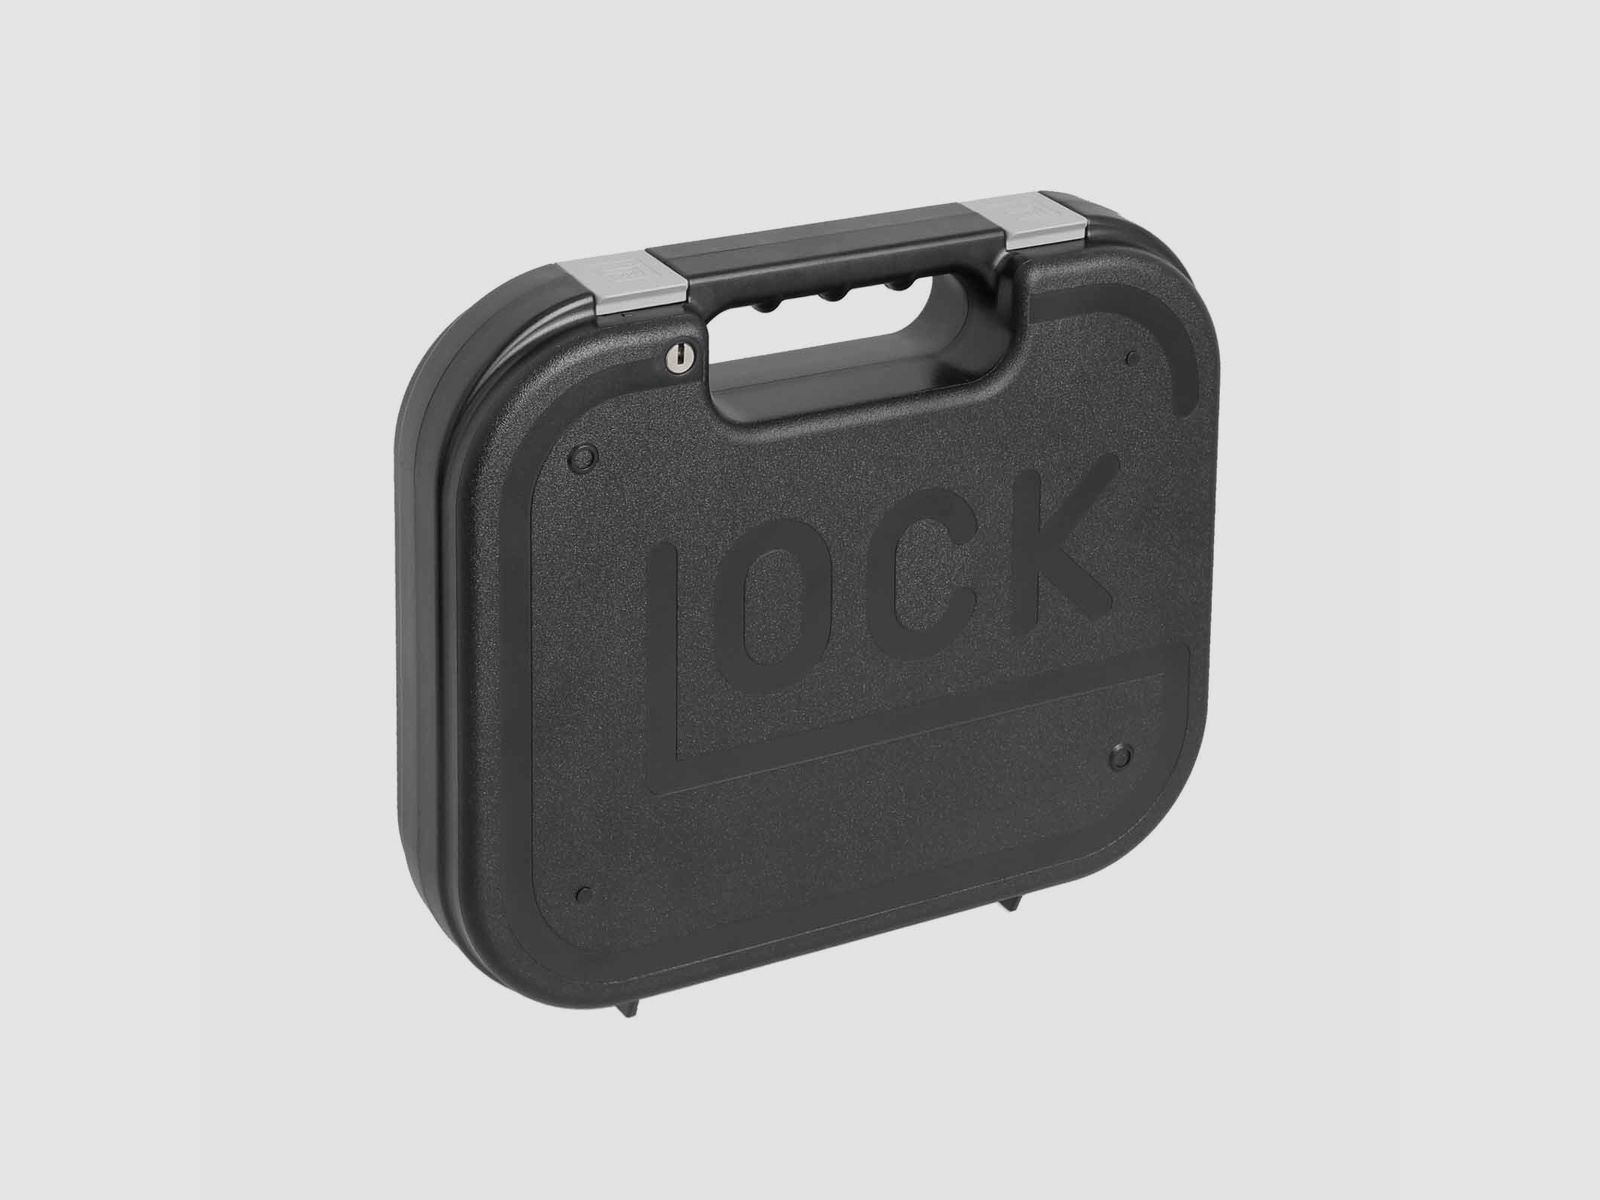 Glock Pistolenkoffer Schwarz 27 x 24 x 6 cm abschließbar